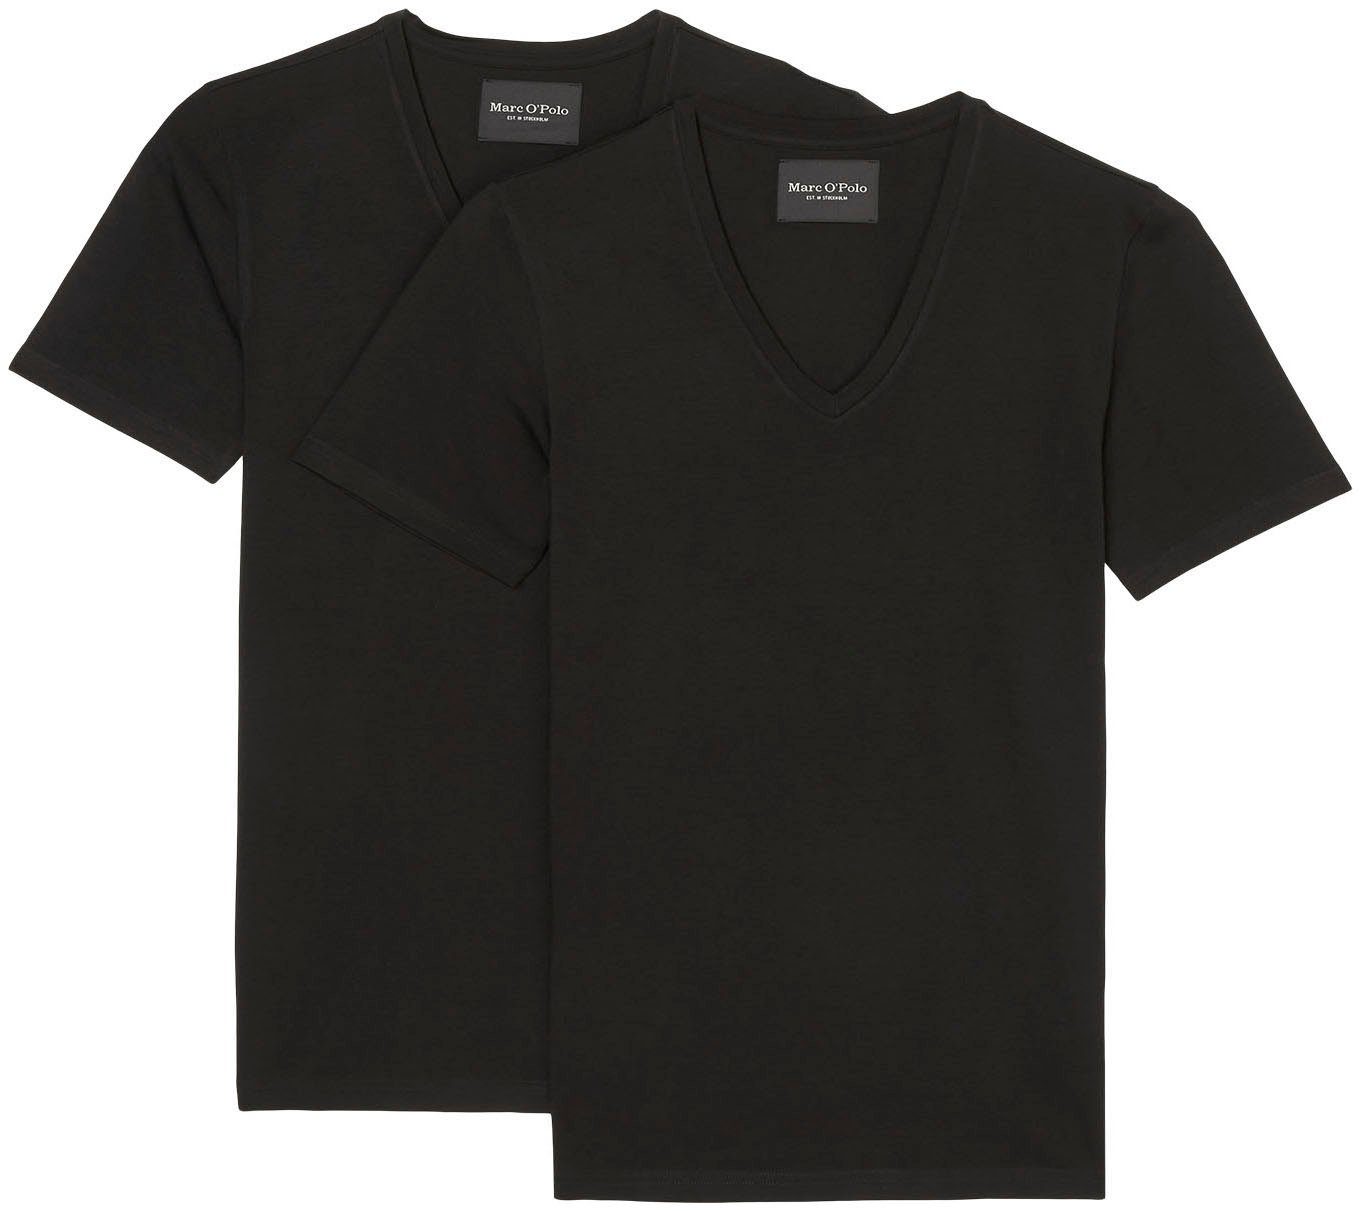 schwarz V-Shirt O'Polo Marc